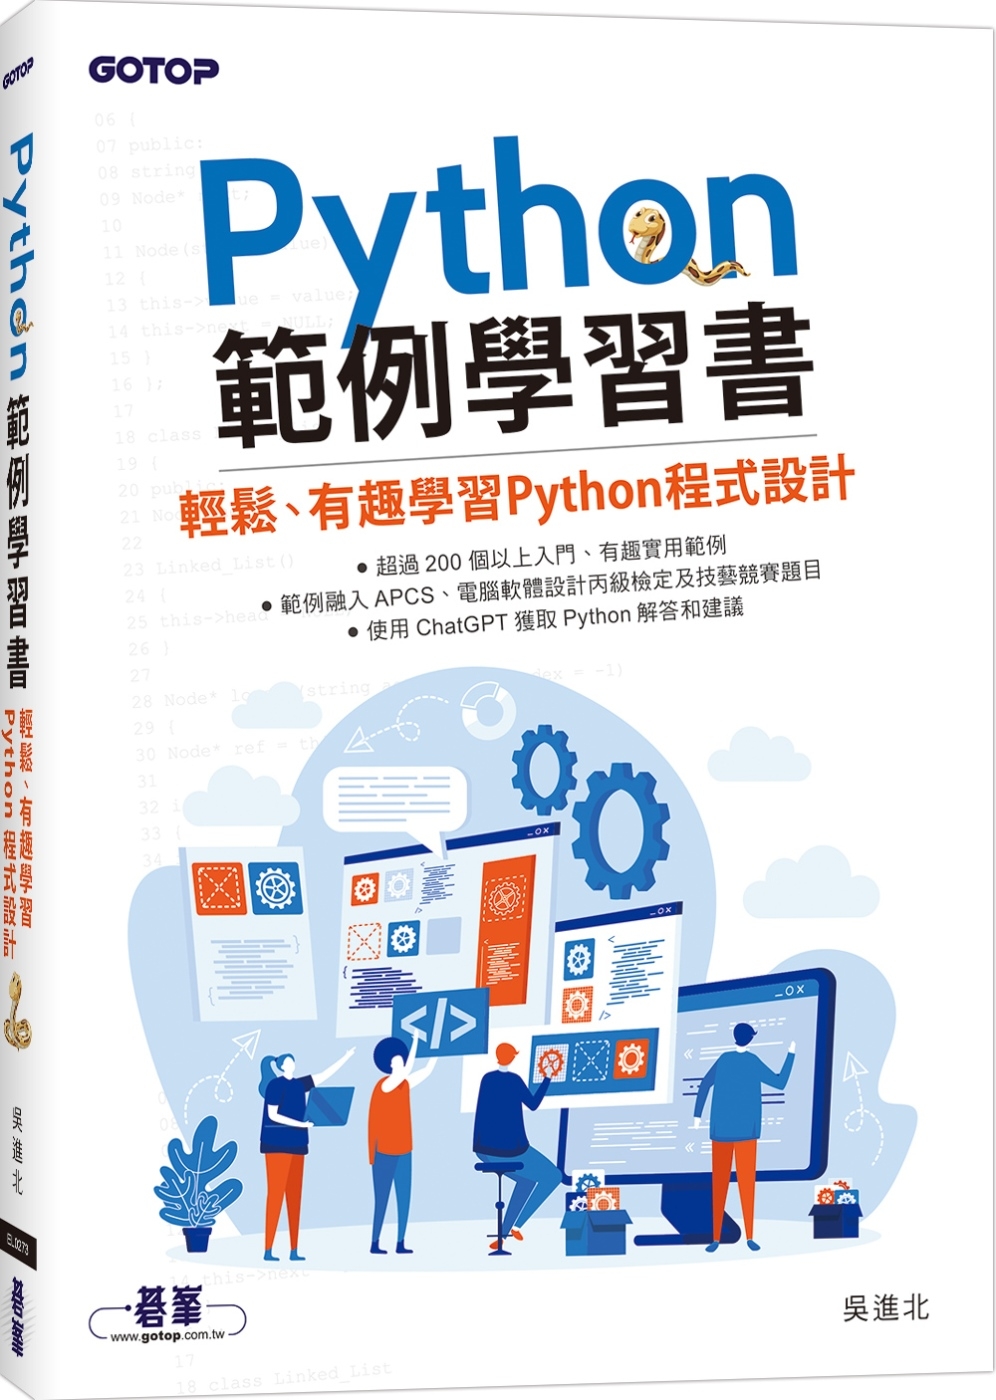 Python範例學習書｜輕鬆、有趣學習Python程式設計